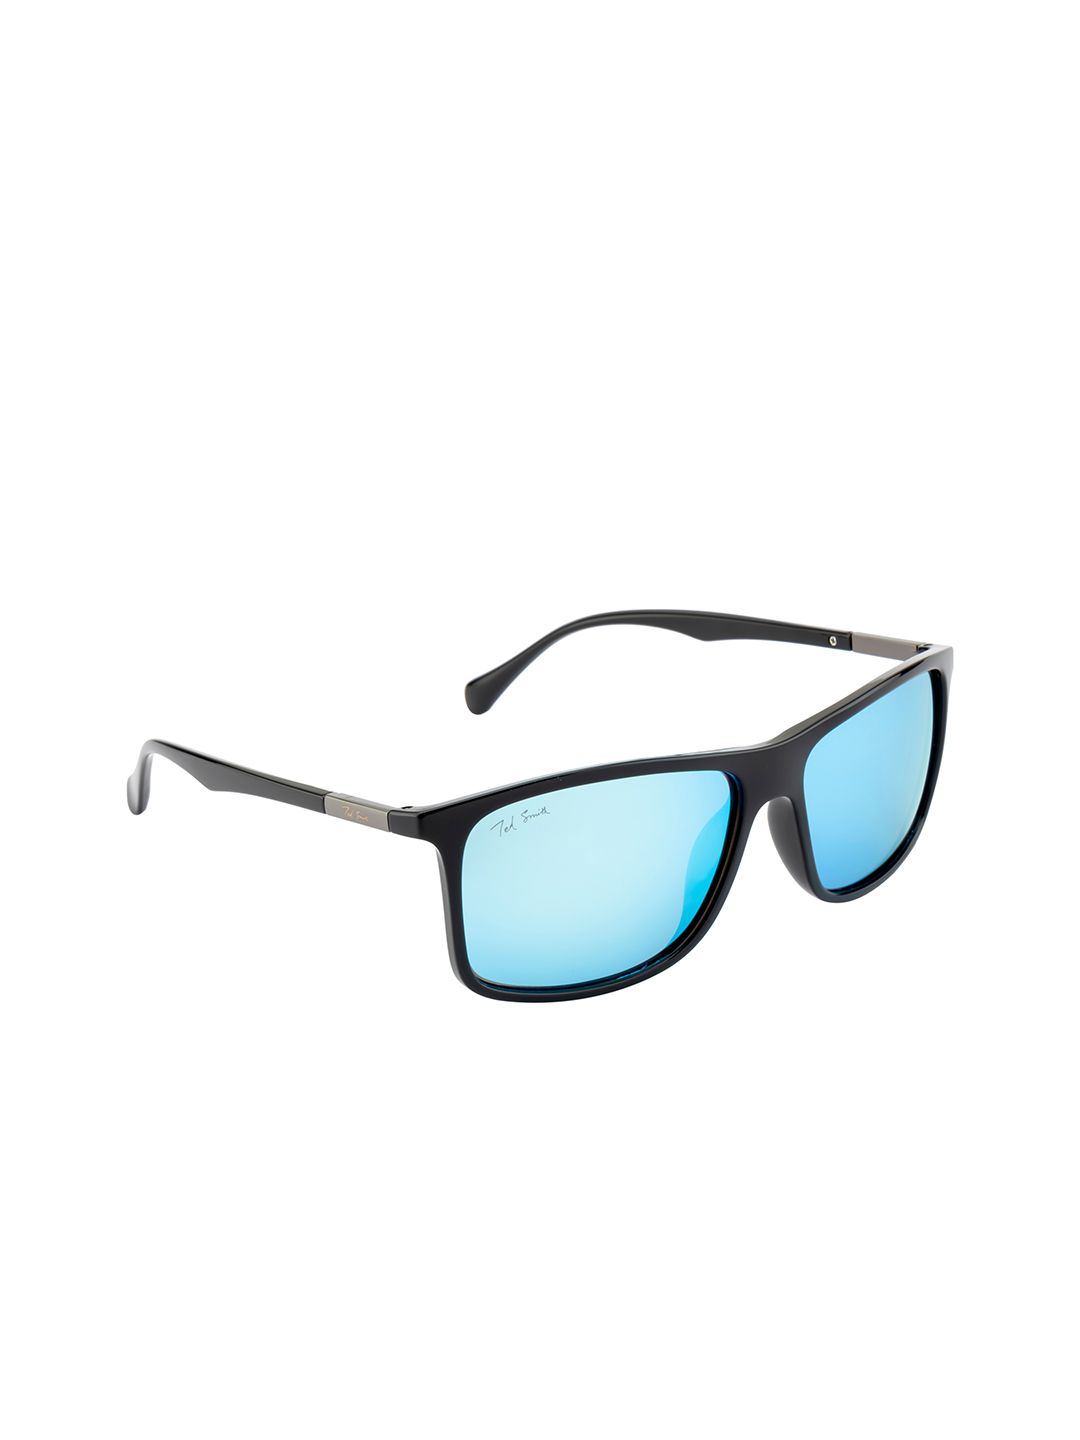 Ted Smith Unisex Blue Acetate Wayfarer Sunglasses TS-N1262S_BLU Price in India